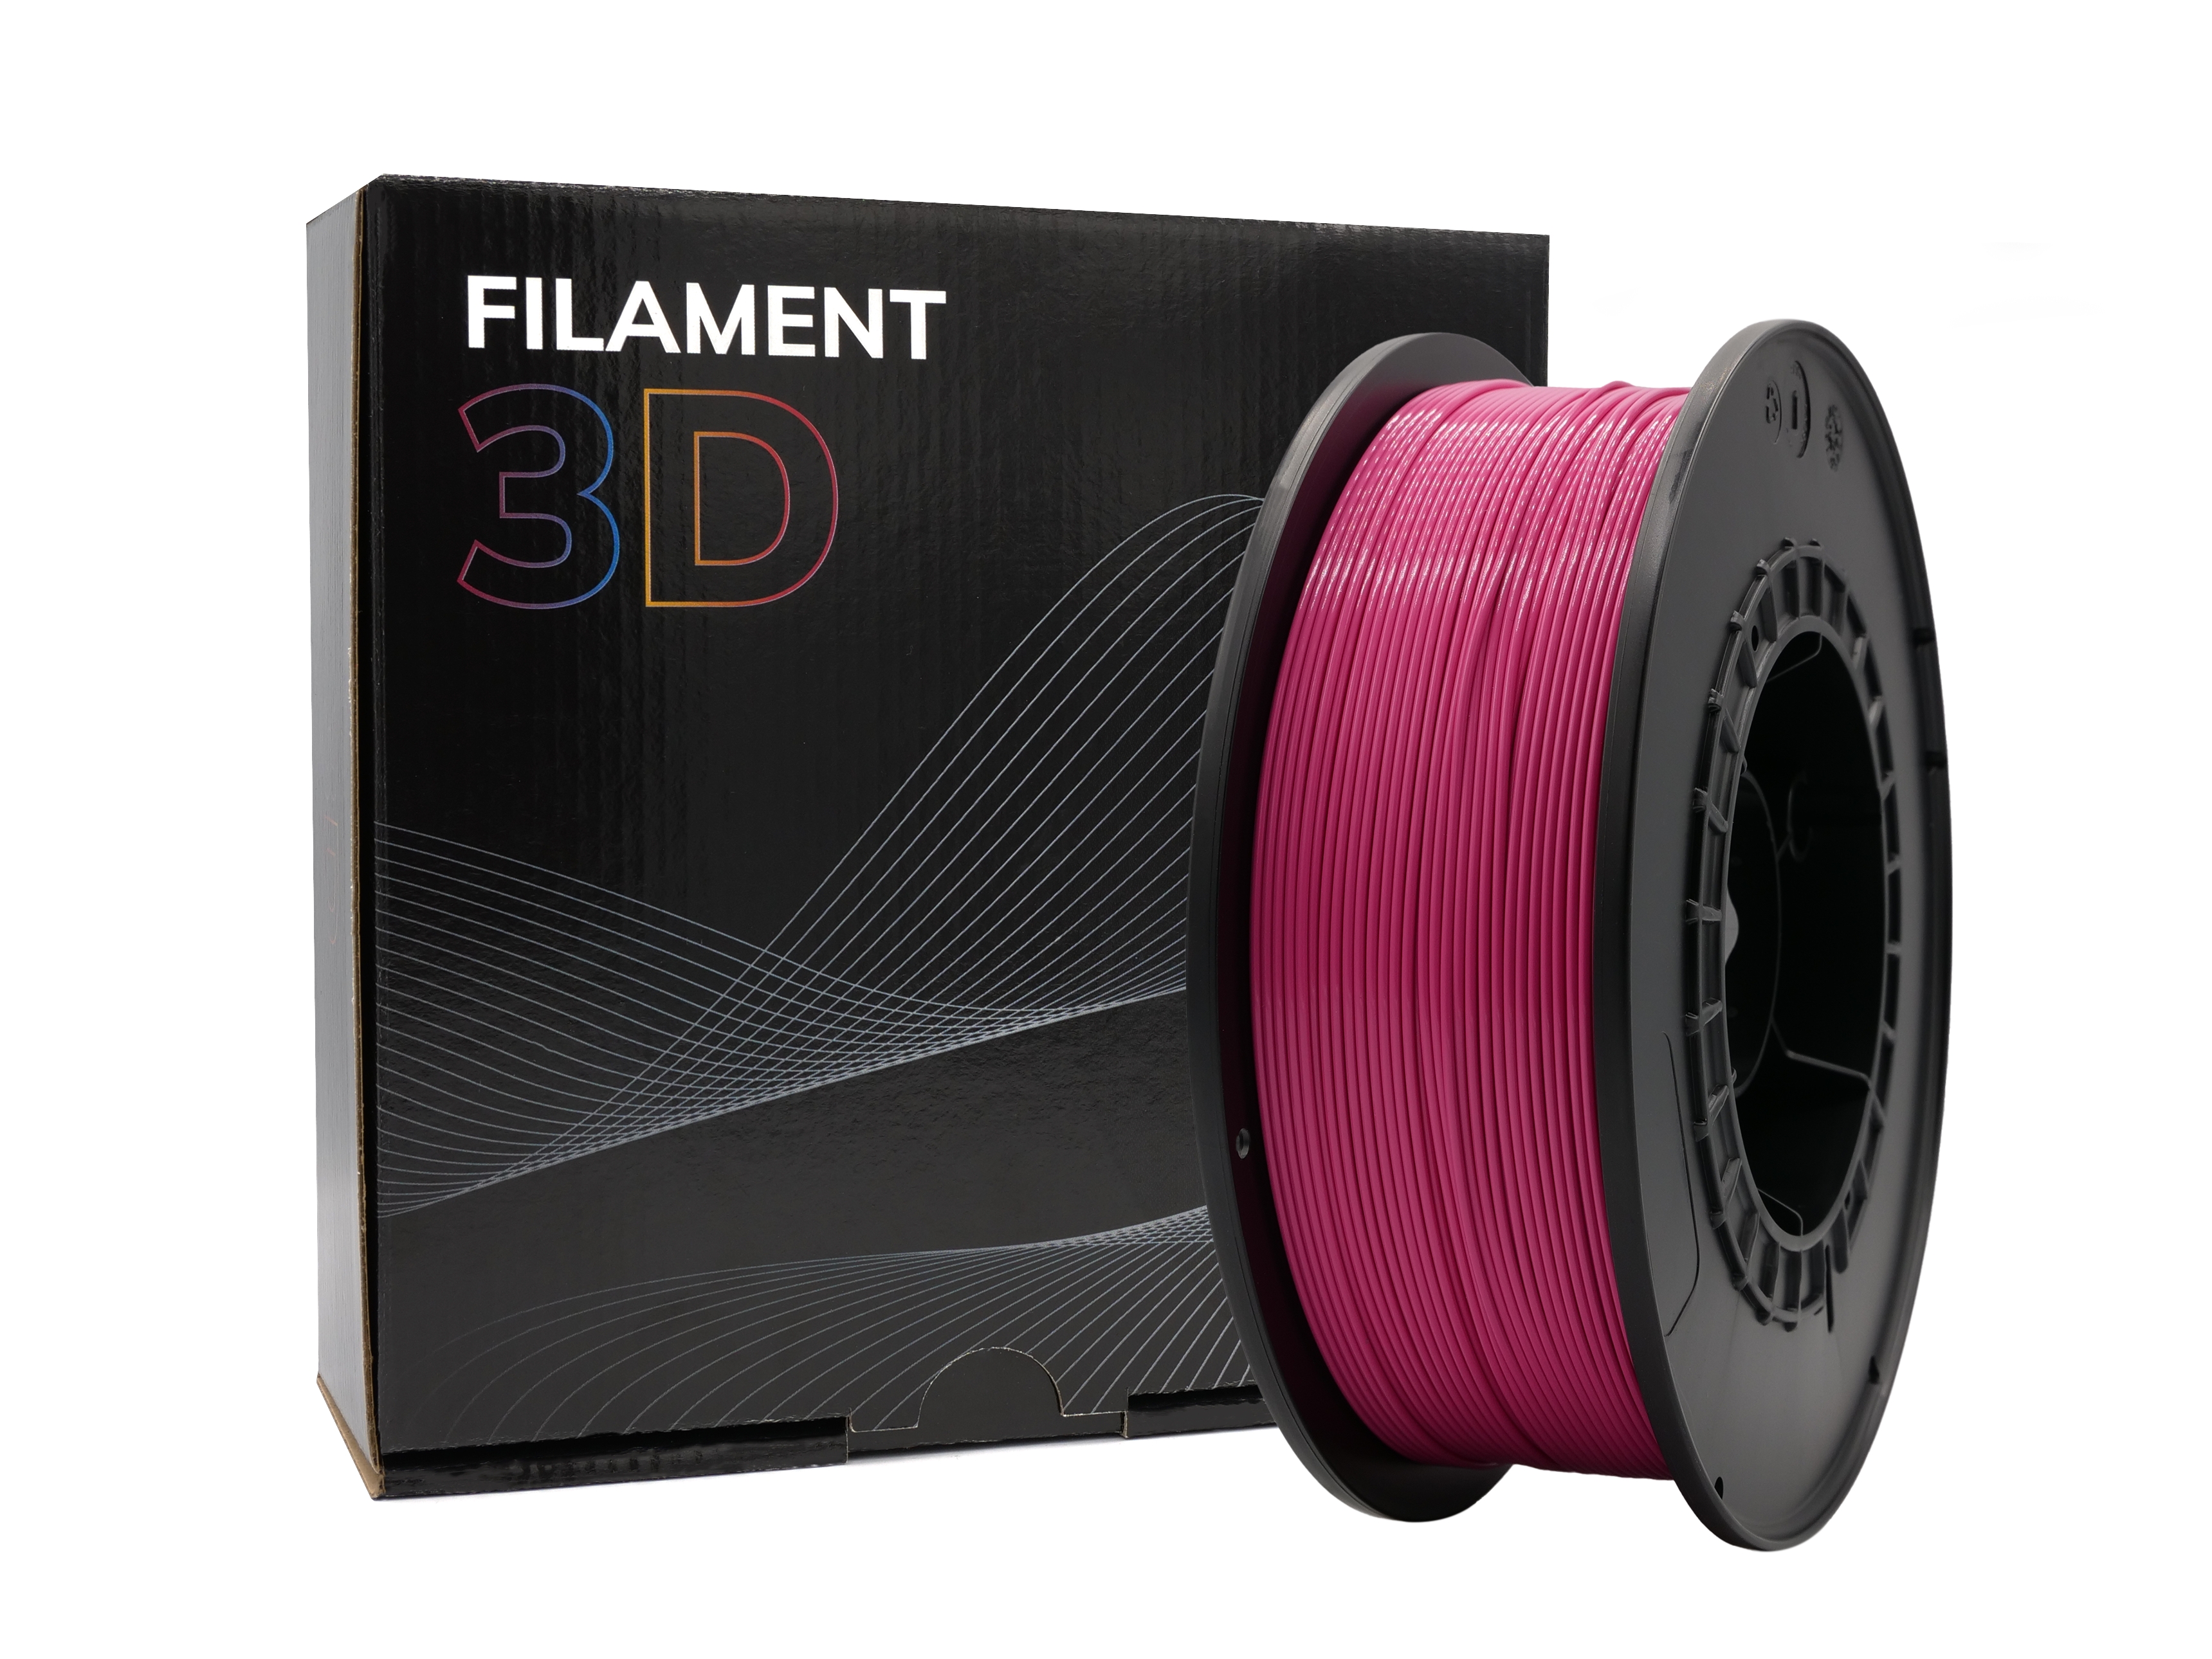 Filament PLA 3D - Diamètre 1.75mm - Bobine 1kg - Couleur Magenta